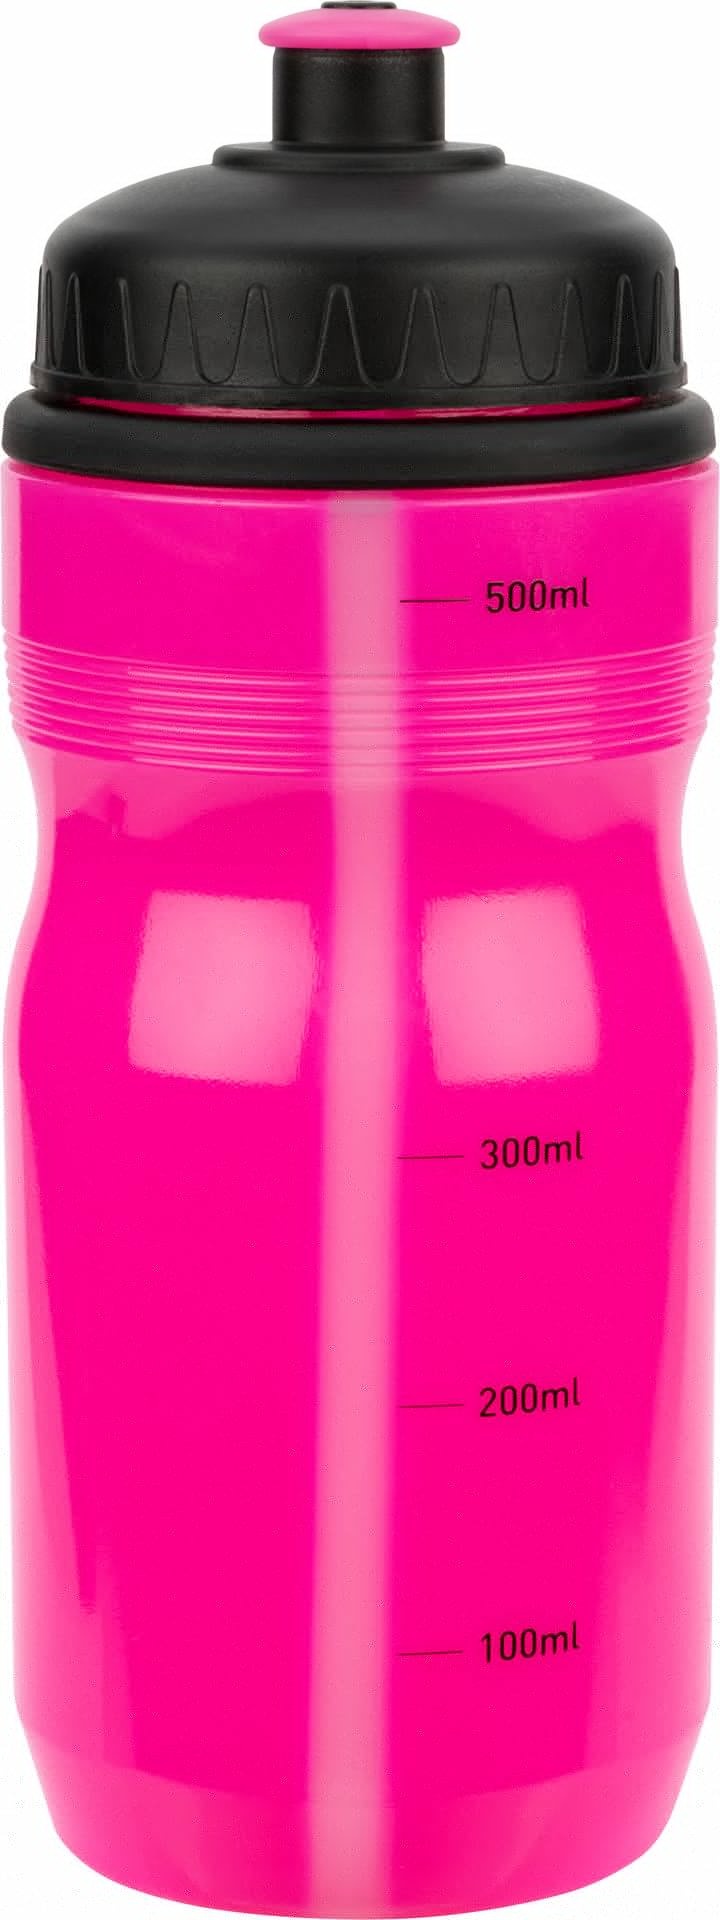 Avento® Avento - Sportbidon • Duduma 0.5 Liter • Fluorroze/Zwart